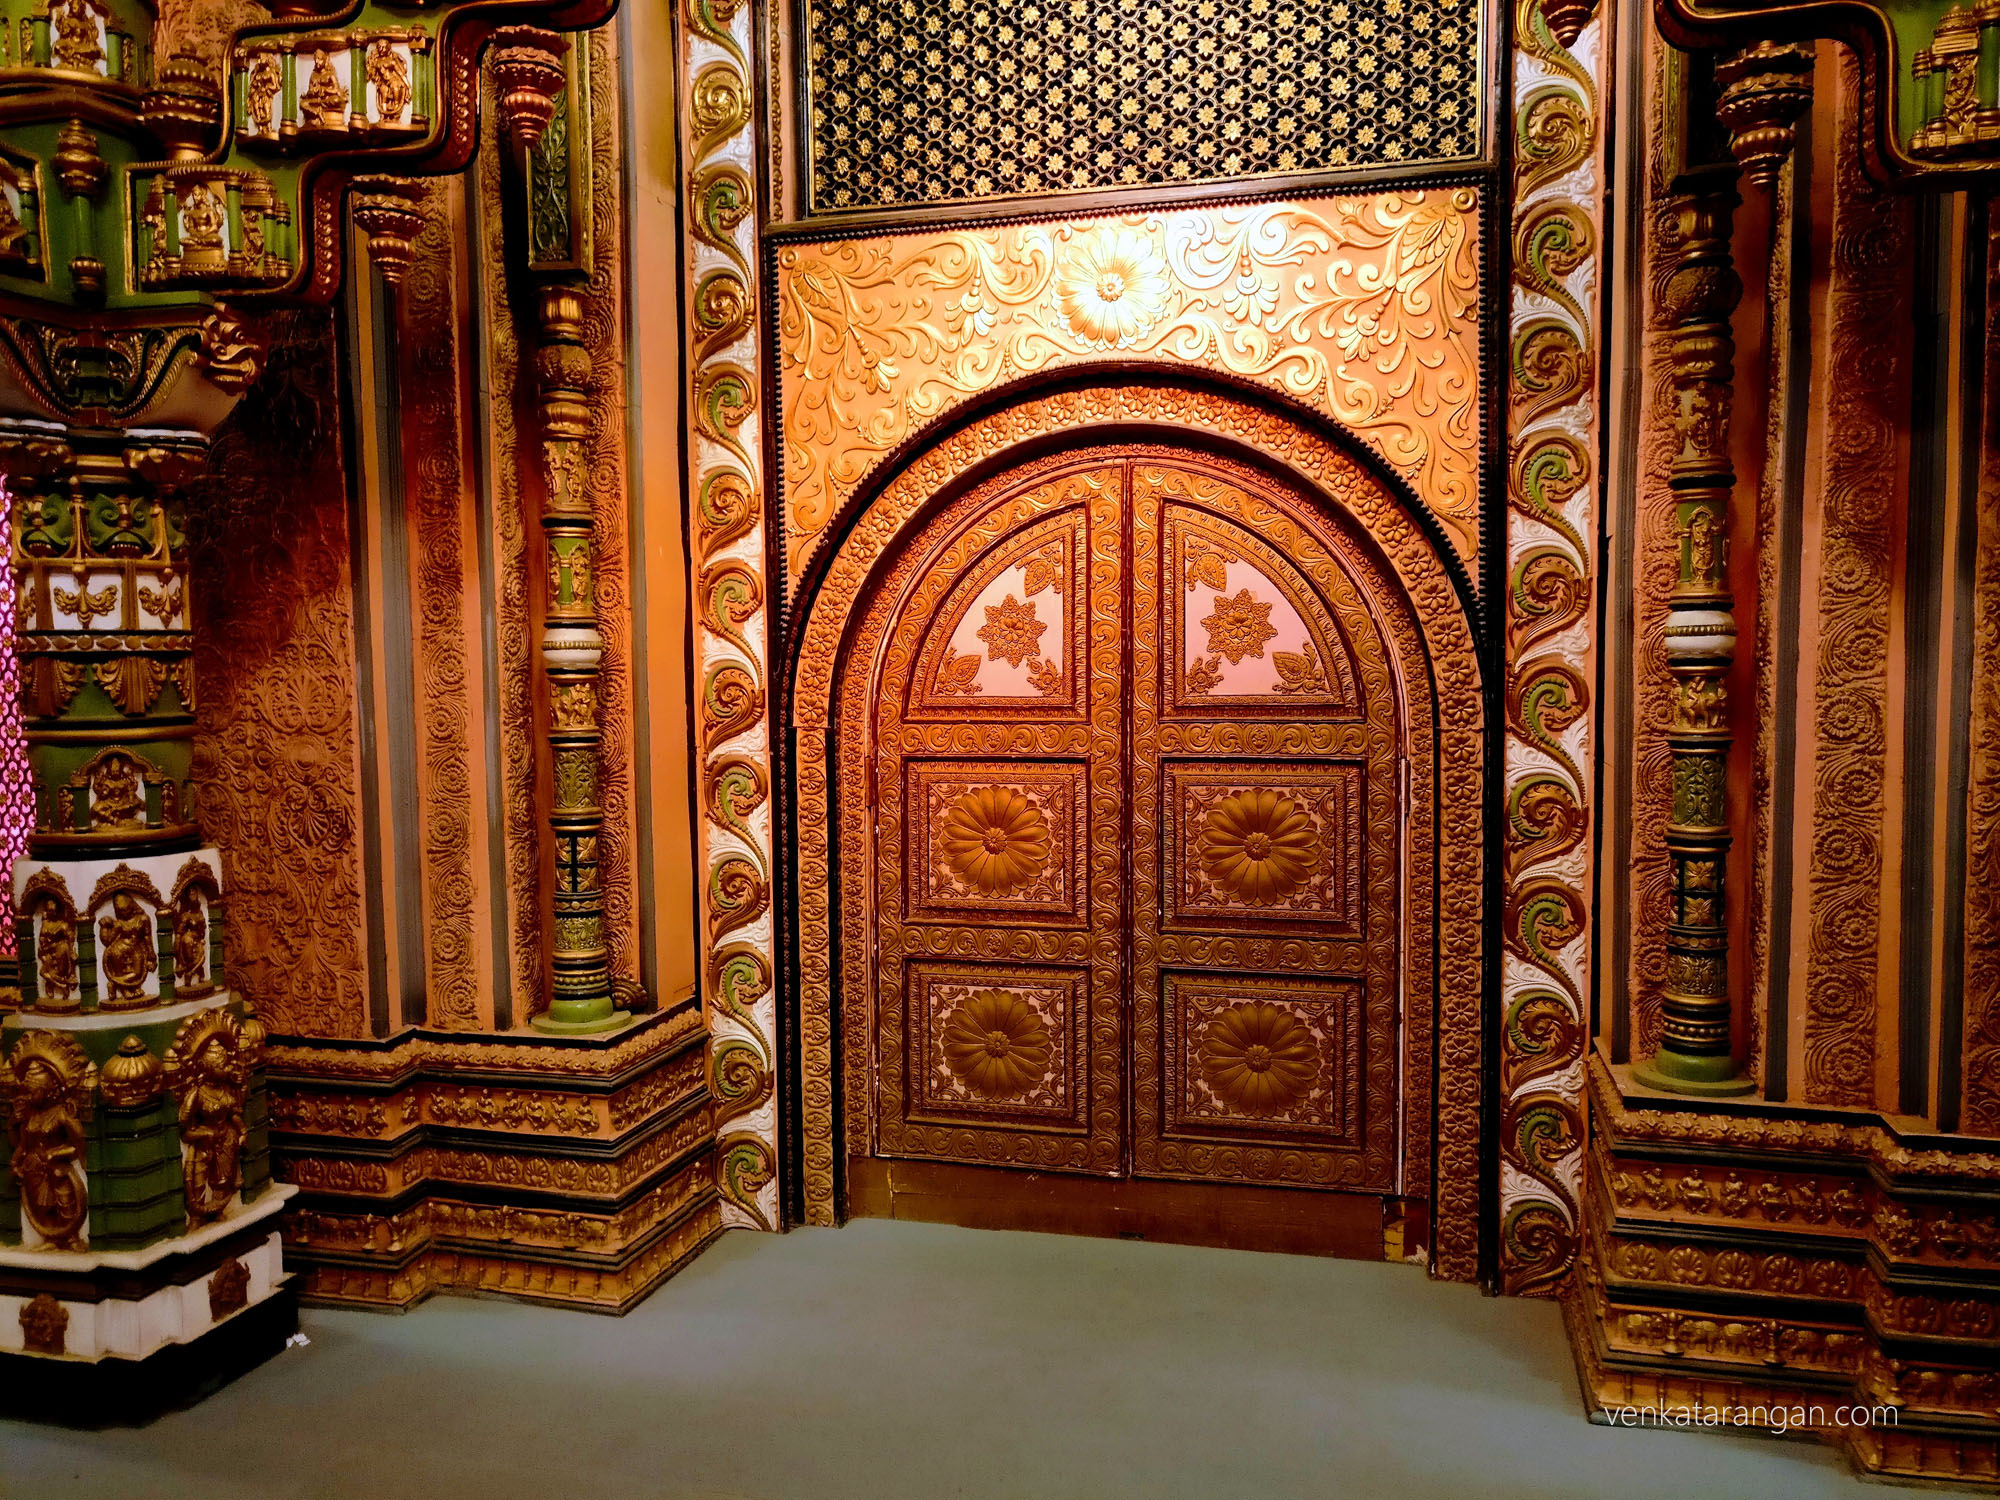 Bhaghavatham set - Exquisitely done doorway